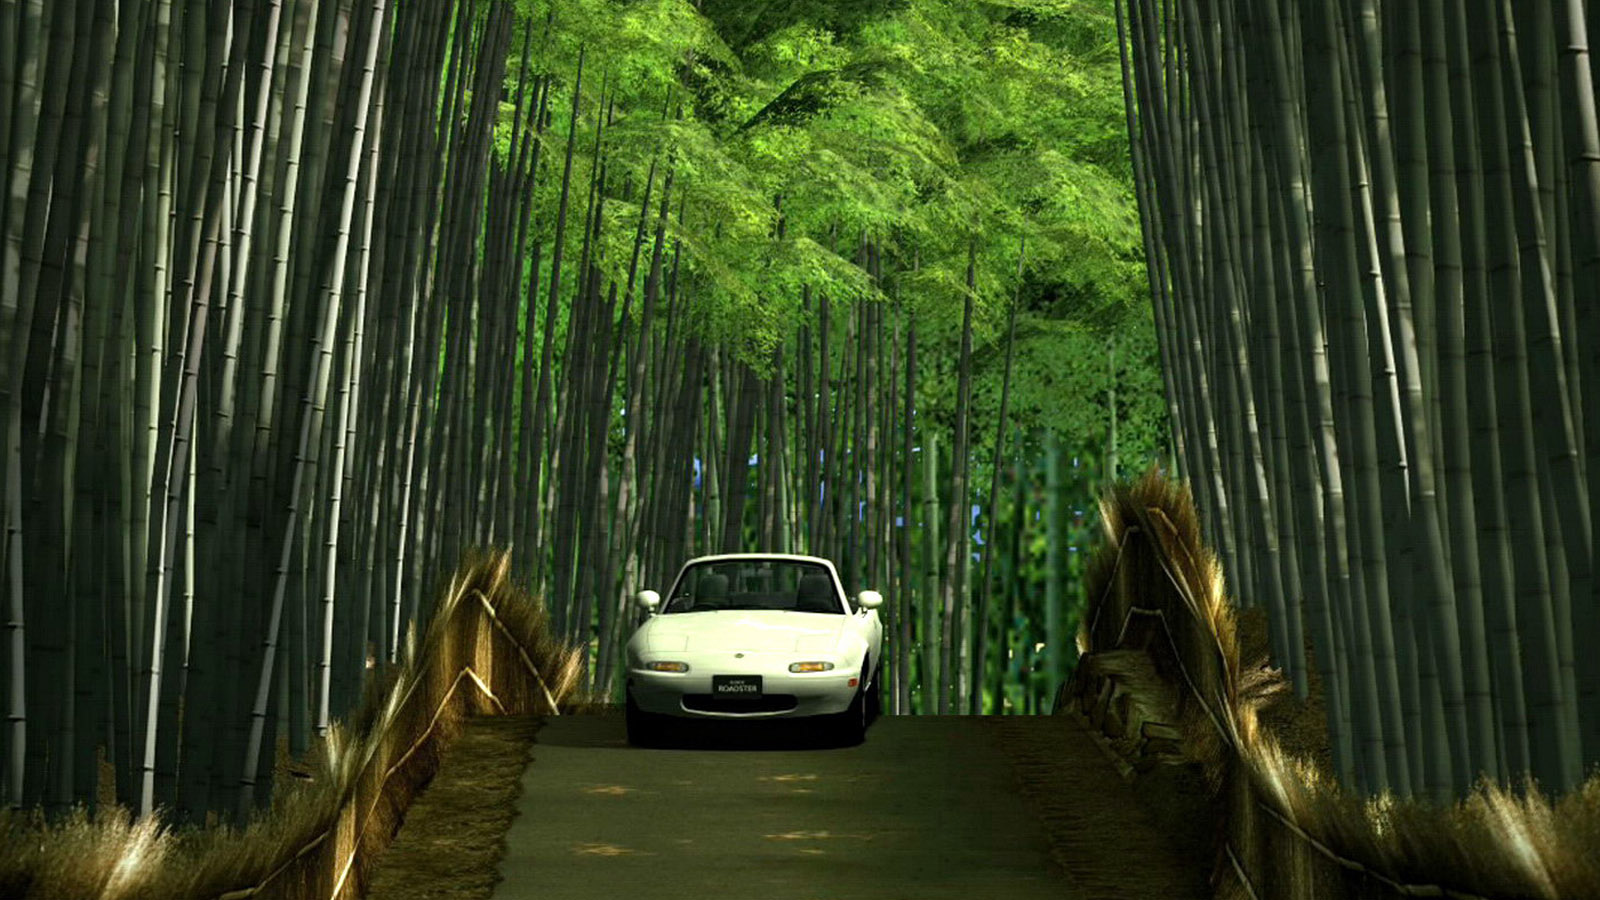 High-definition bamboo forest landscape desktop background picture